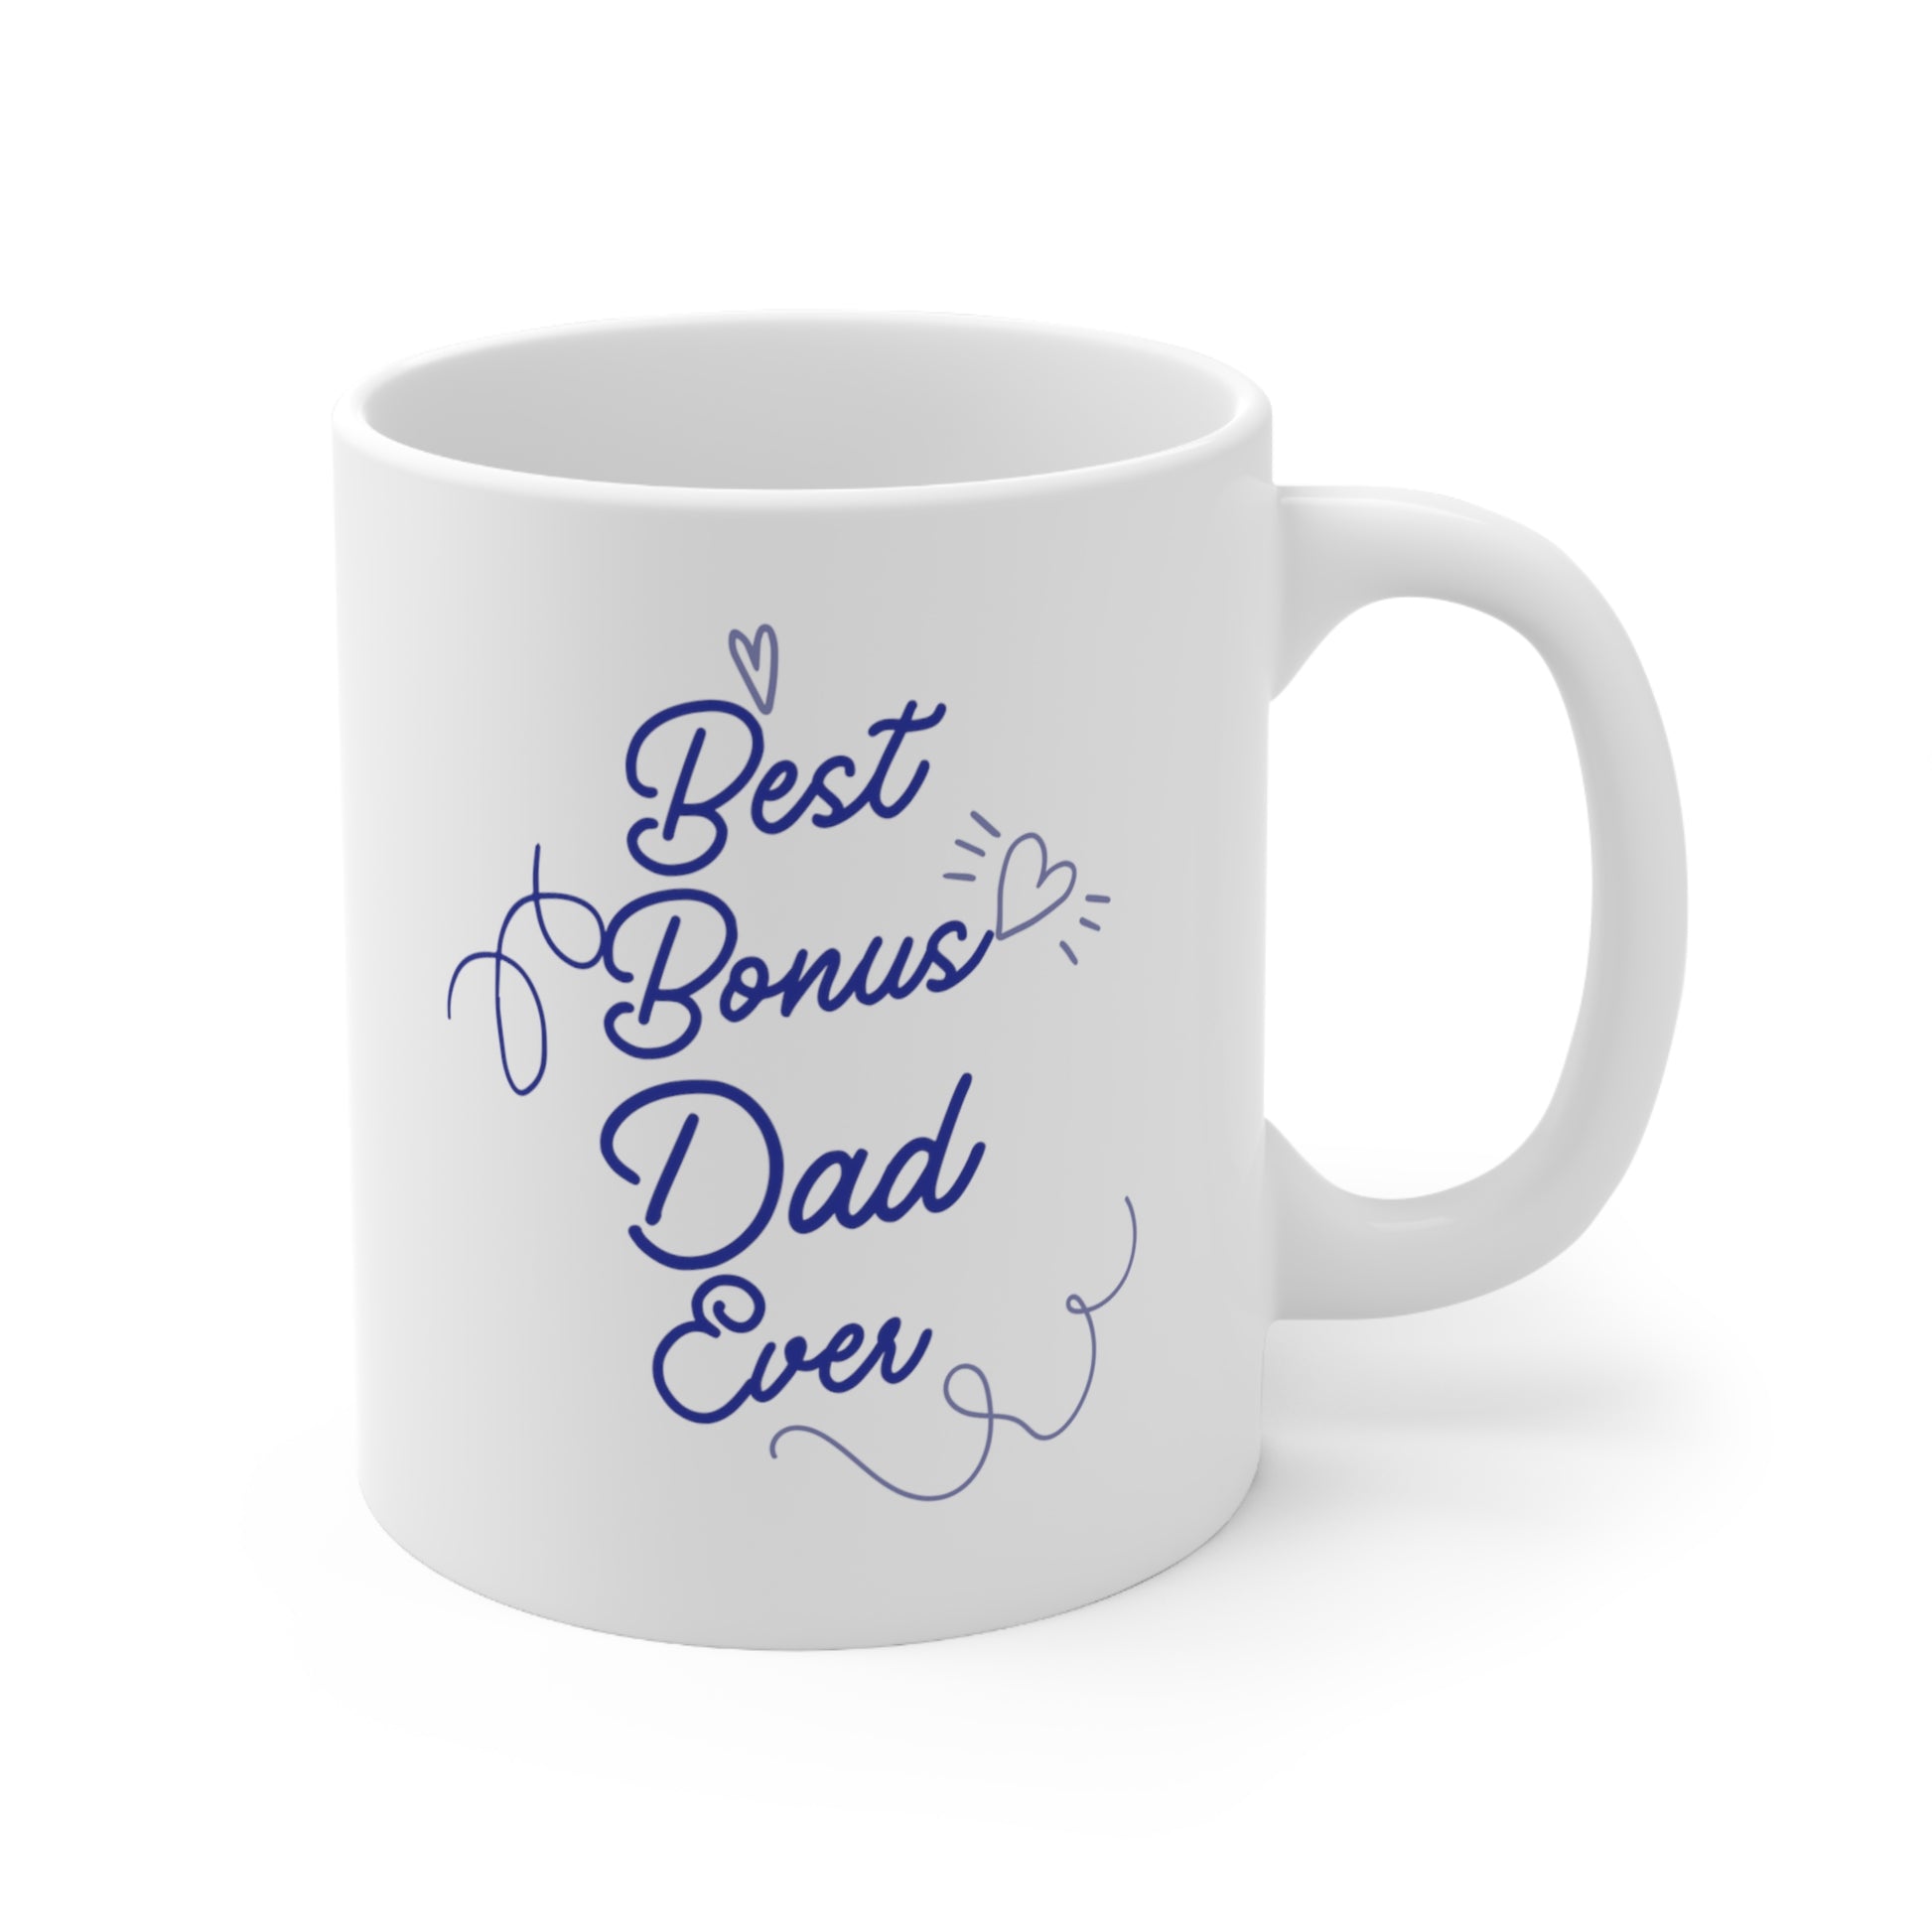 Best Bonus Dad Ever Ceramic Mug 11oz